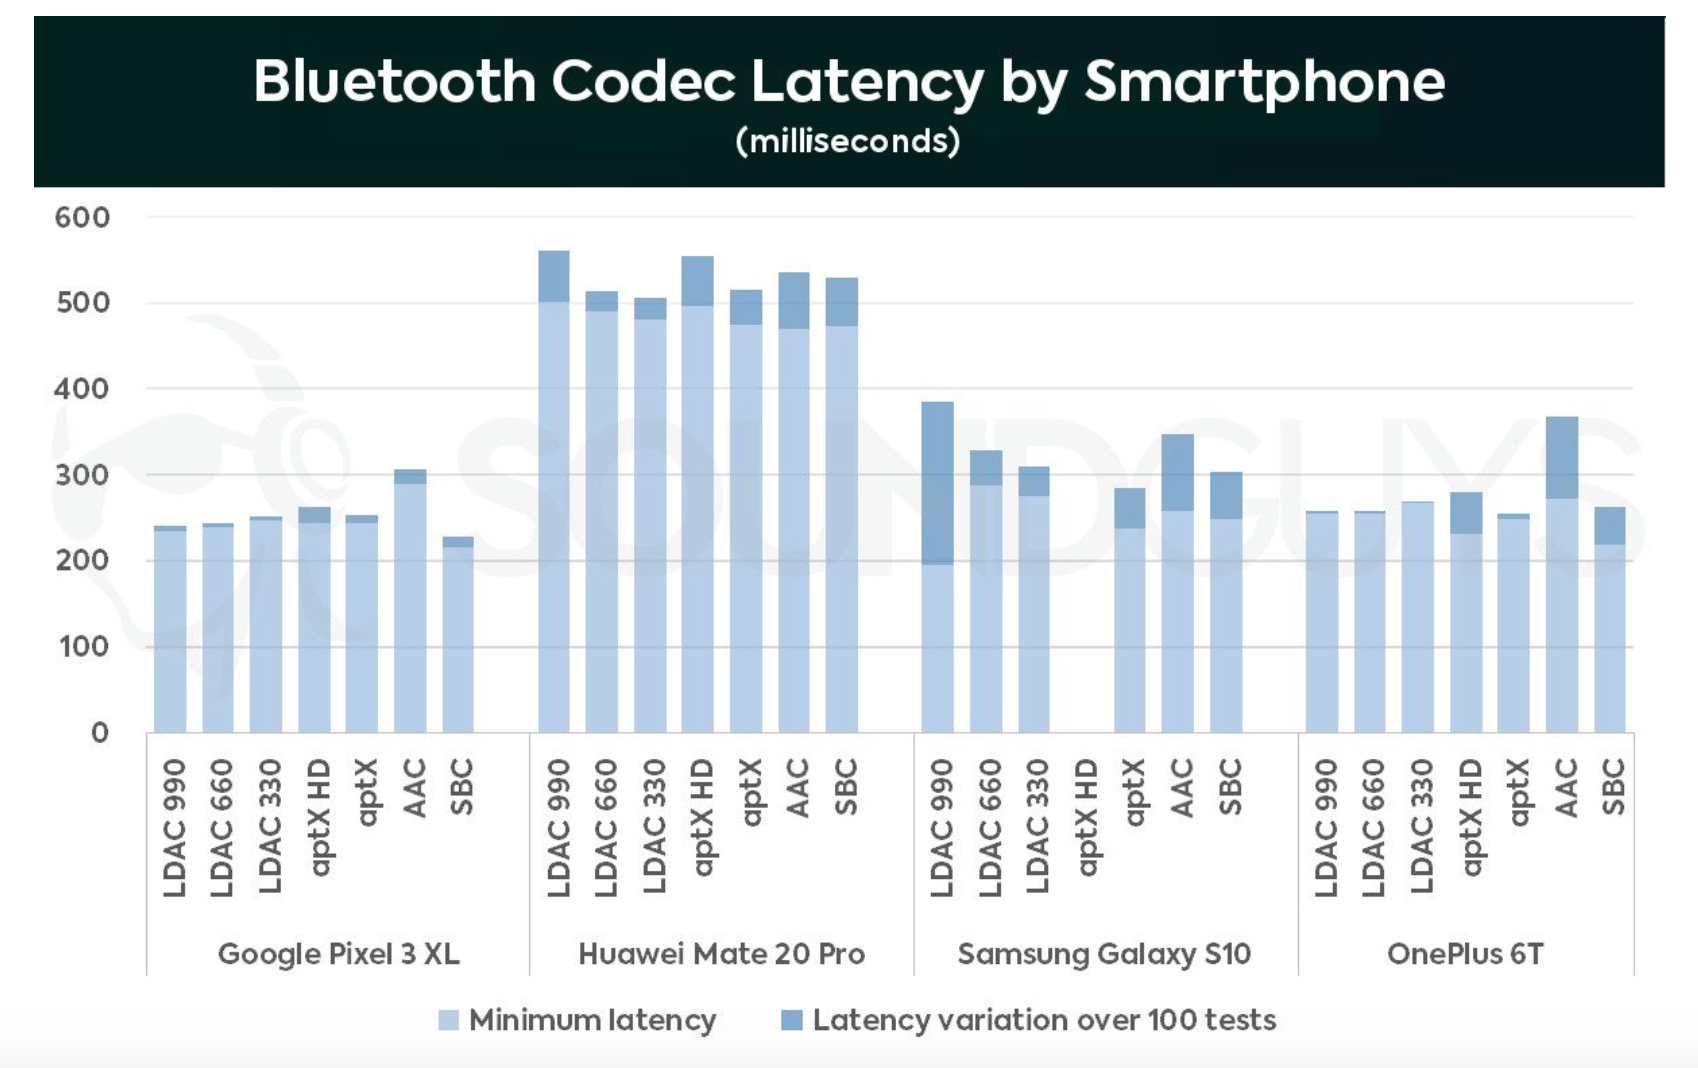 Bluetooth Codec latency